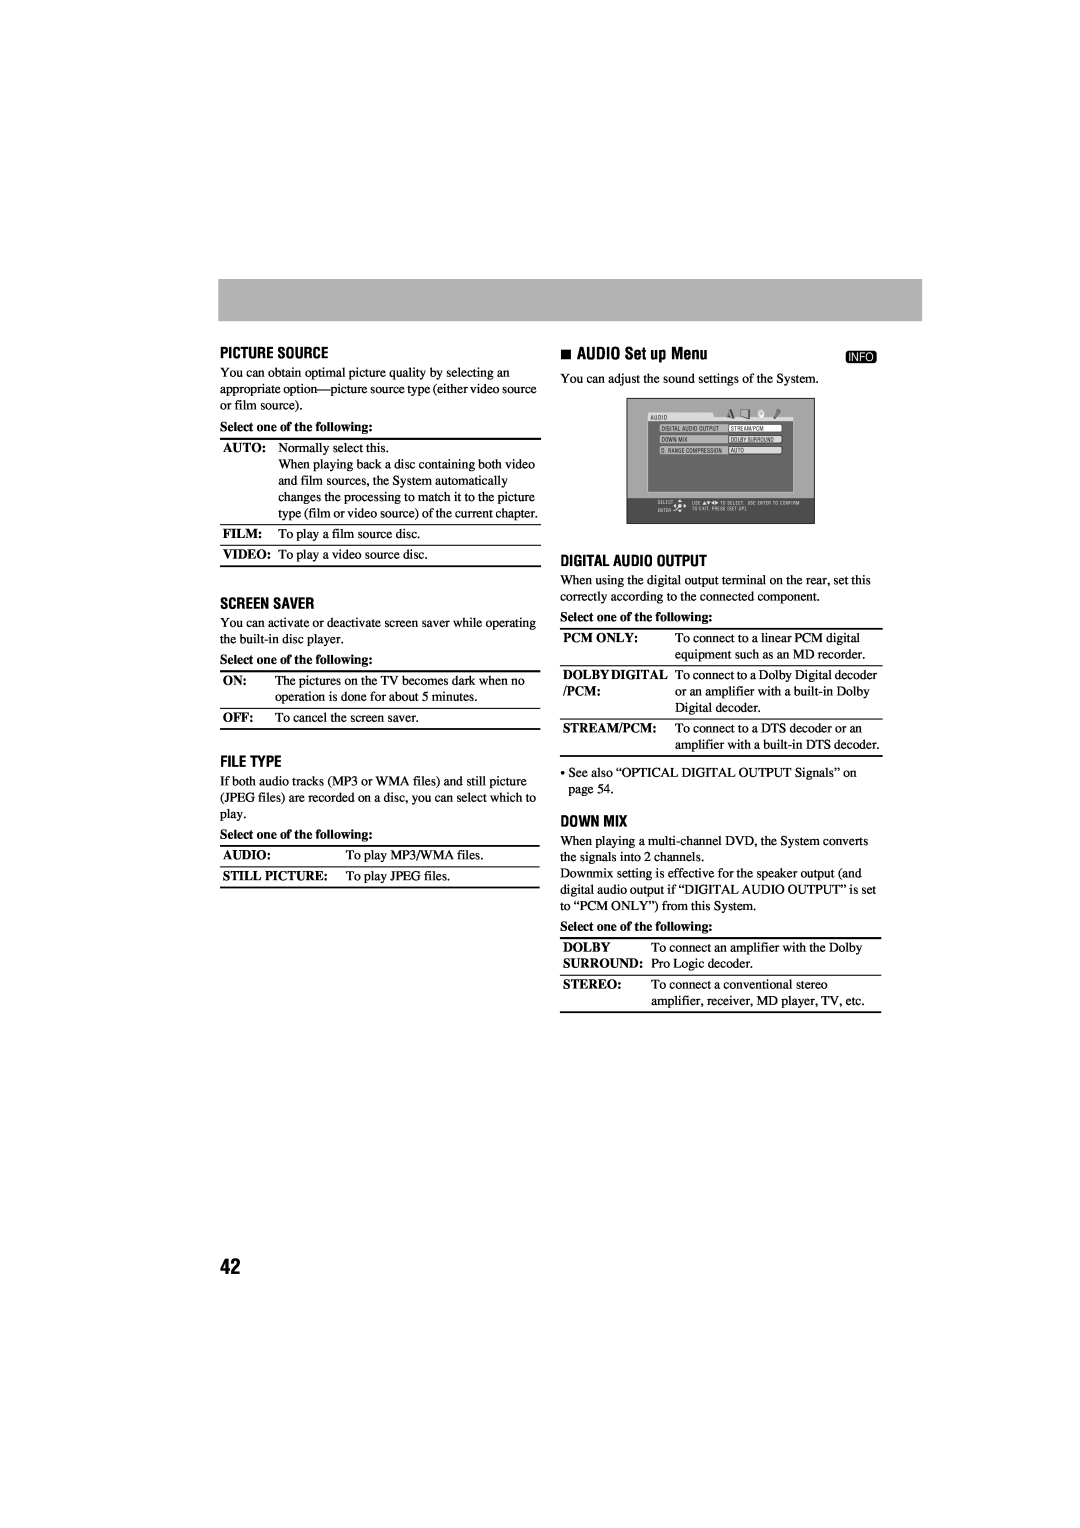 JVC GVT0125-003A manual AUDIO Set up Menu, Picture Source, Screen Saver, File Type, Digital Audio Output, Down Mix 